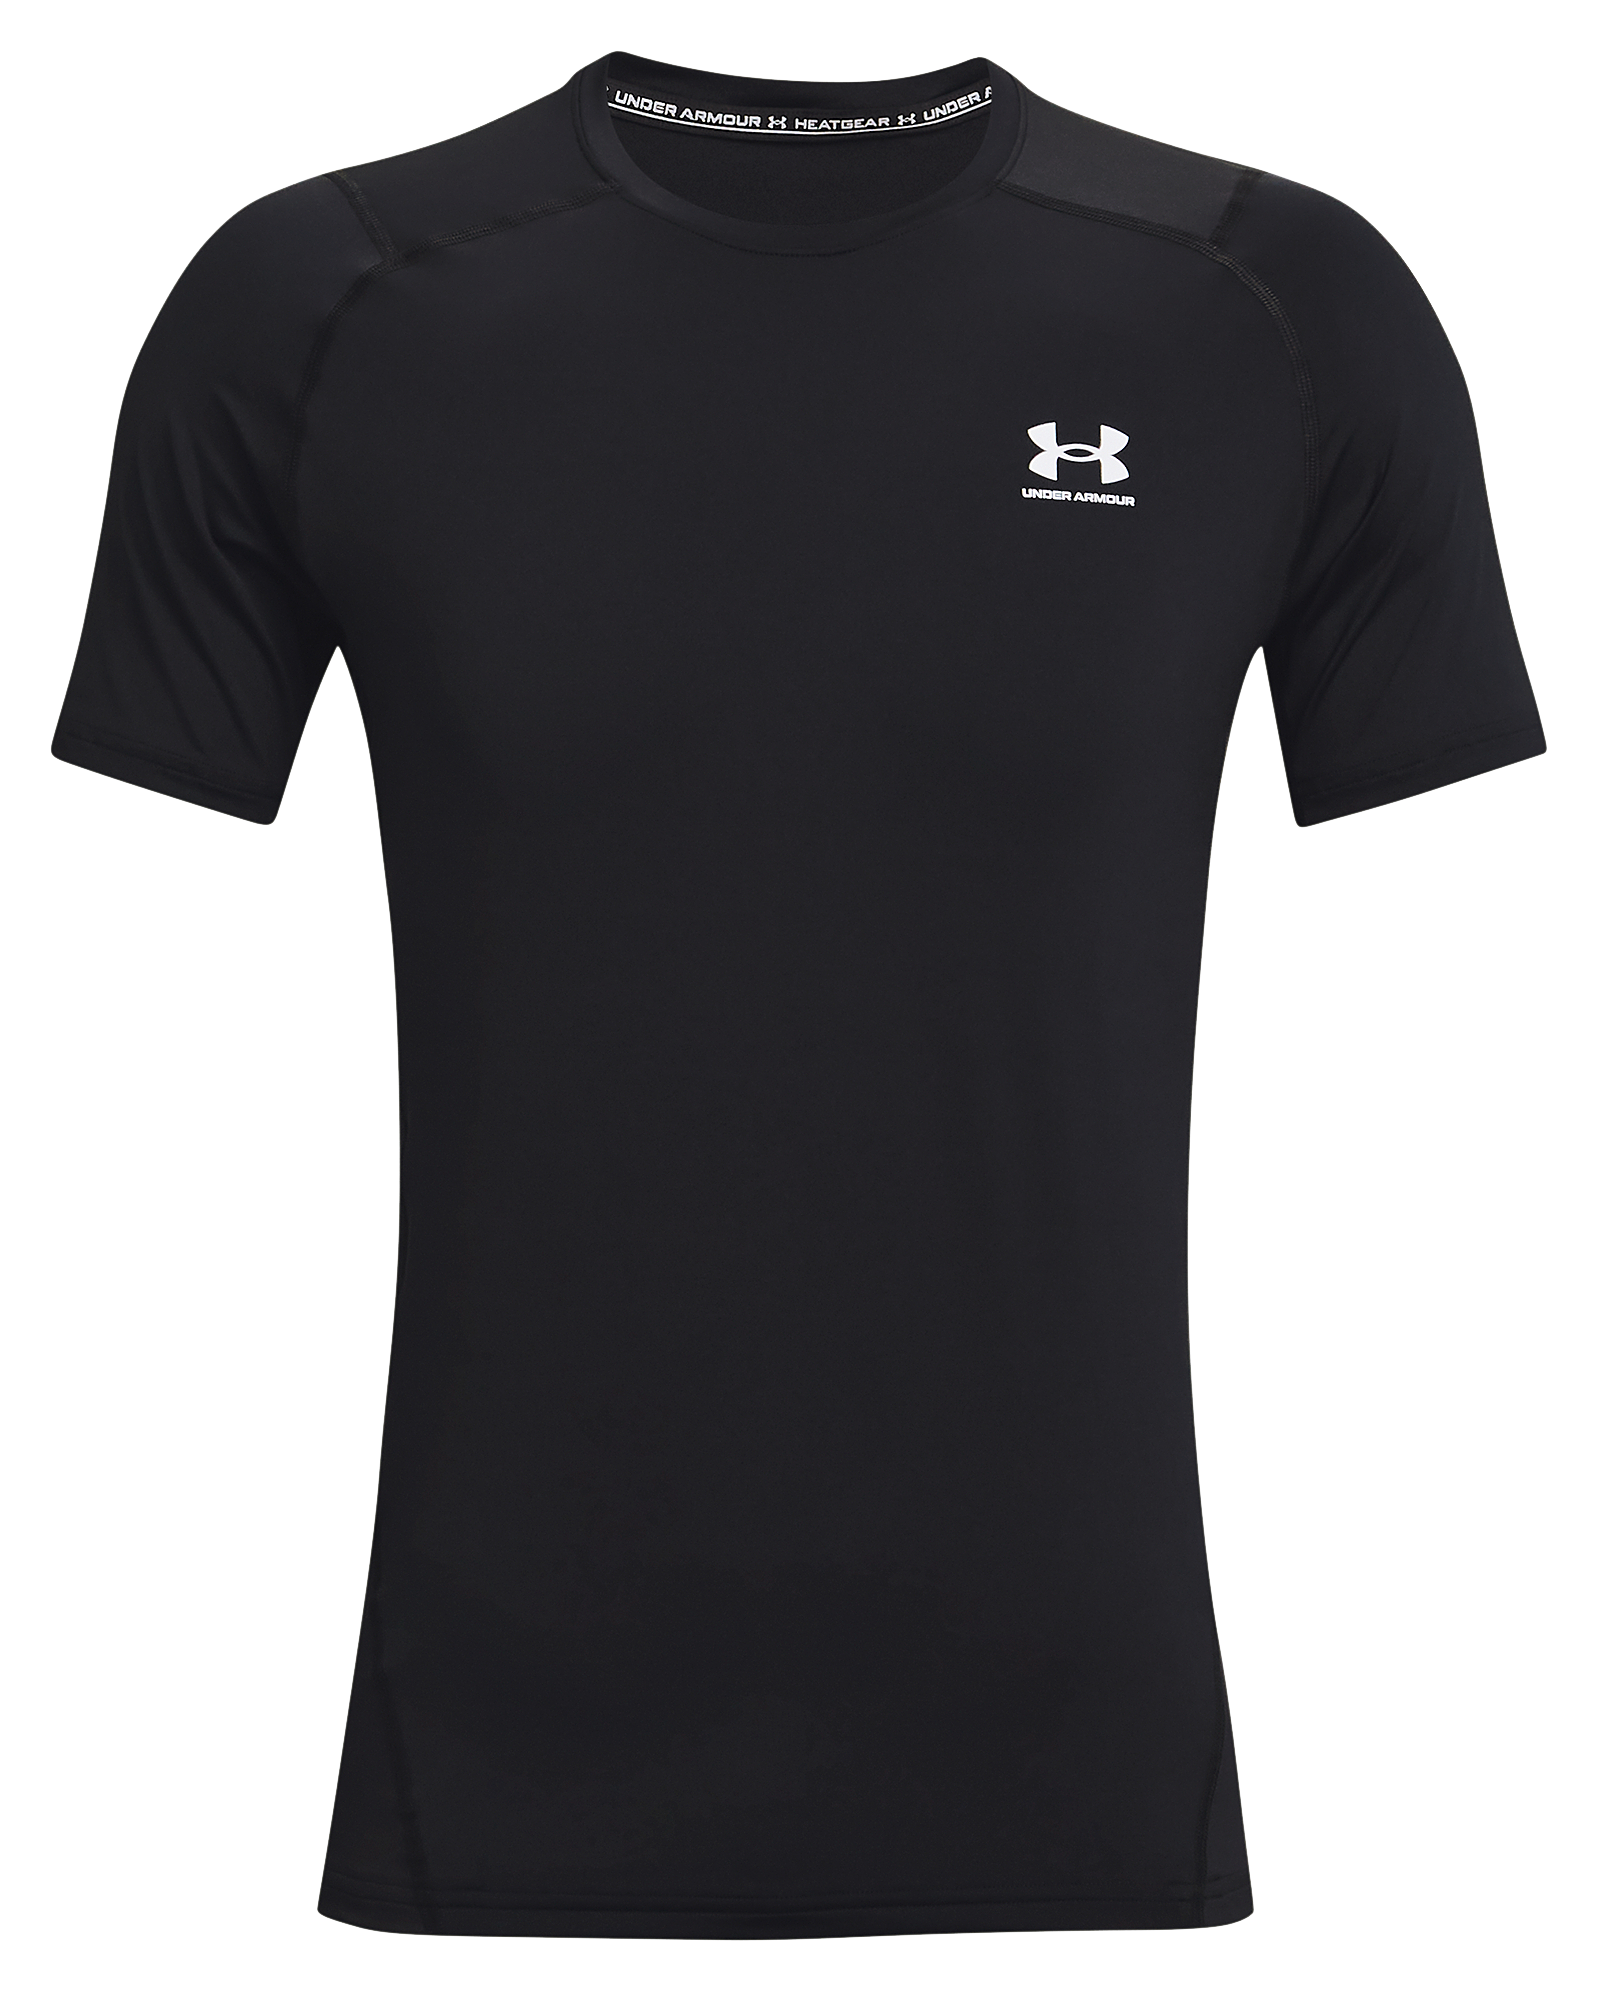 Under Armour HeatGear Fitted Short-Sleeve T-Shirt for Men - Black - 3XLT